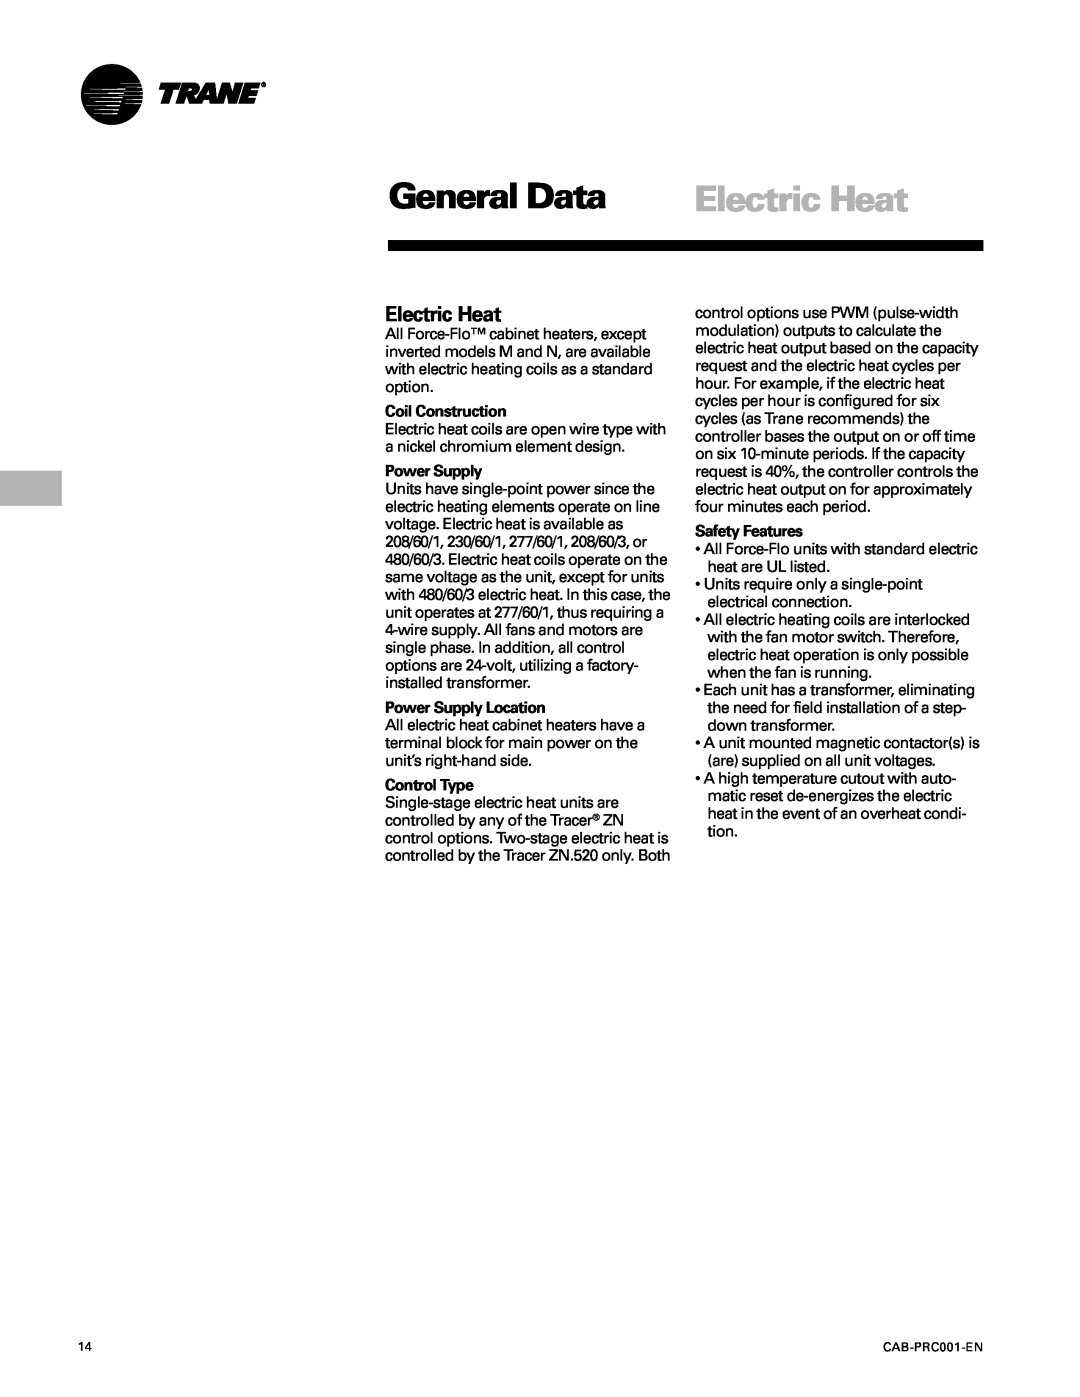 Trane CAB-PRC001-EN manual Electric Heat, General Data 